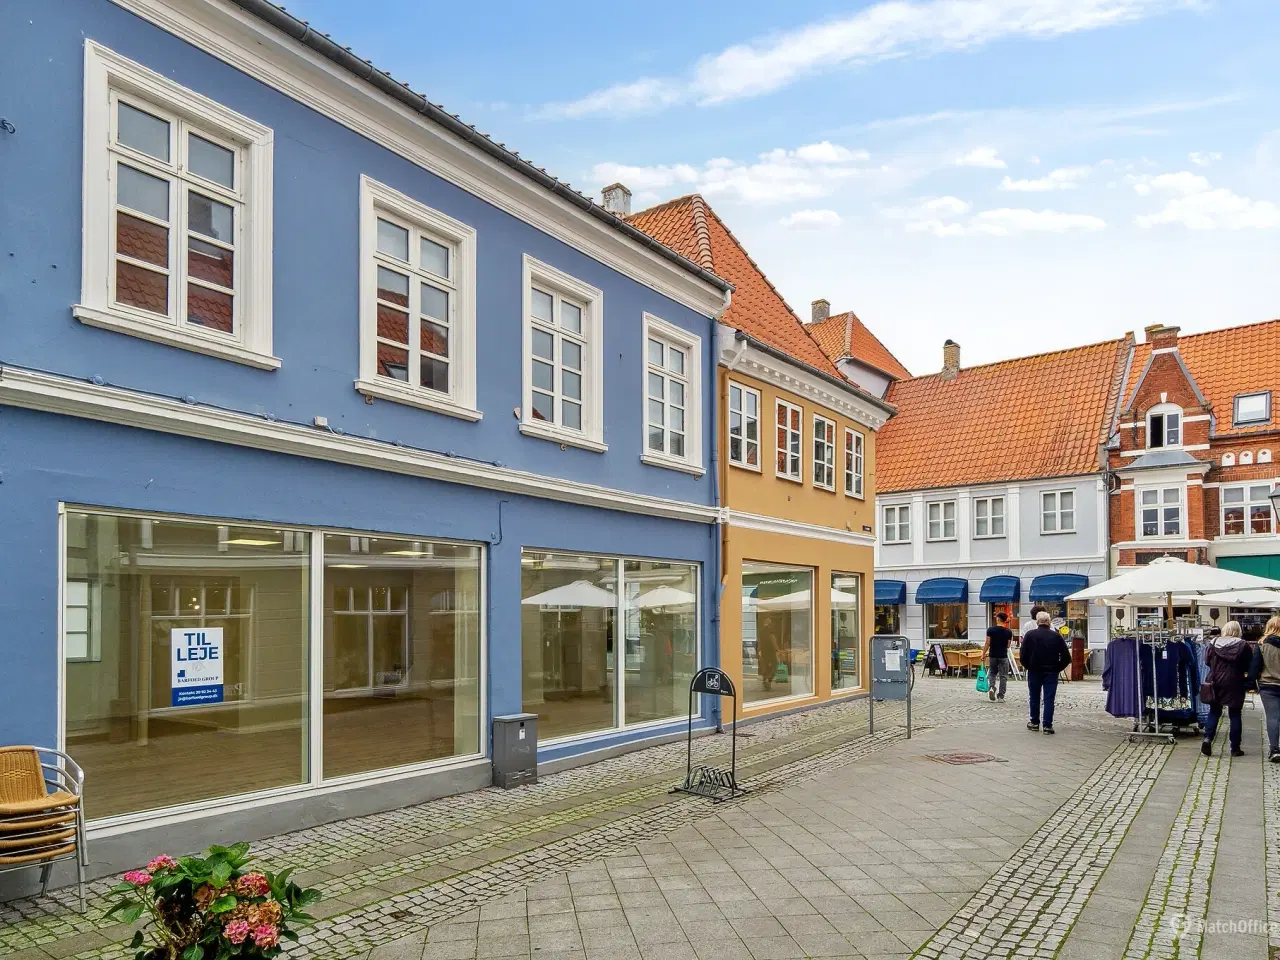 Billede 1 - Flot butik med stor facade på gågaden i Nyborg